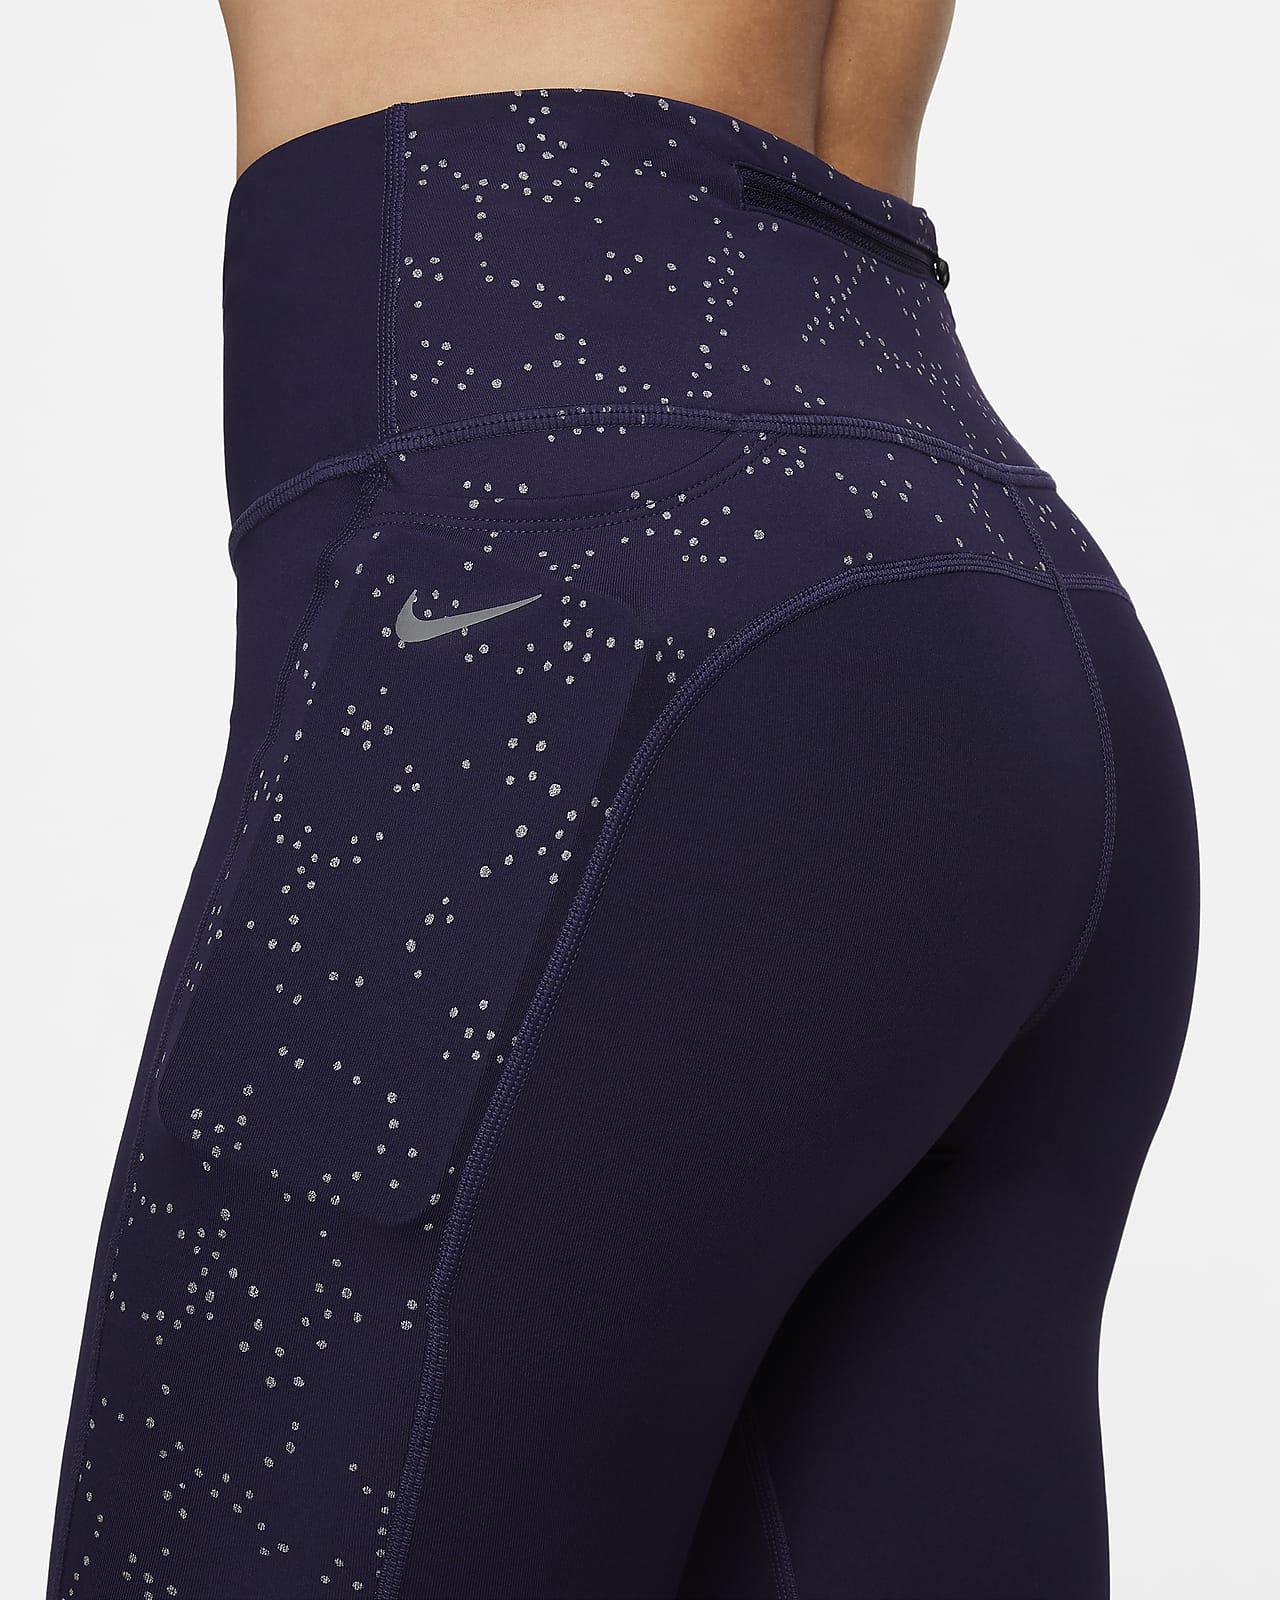 Womens Nike Yoga Dri- Fit 7/8 High- Rise Printed Leggings